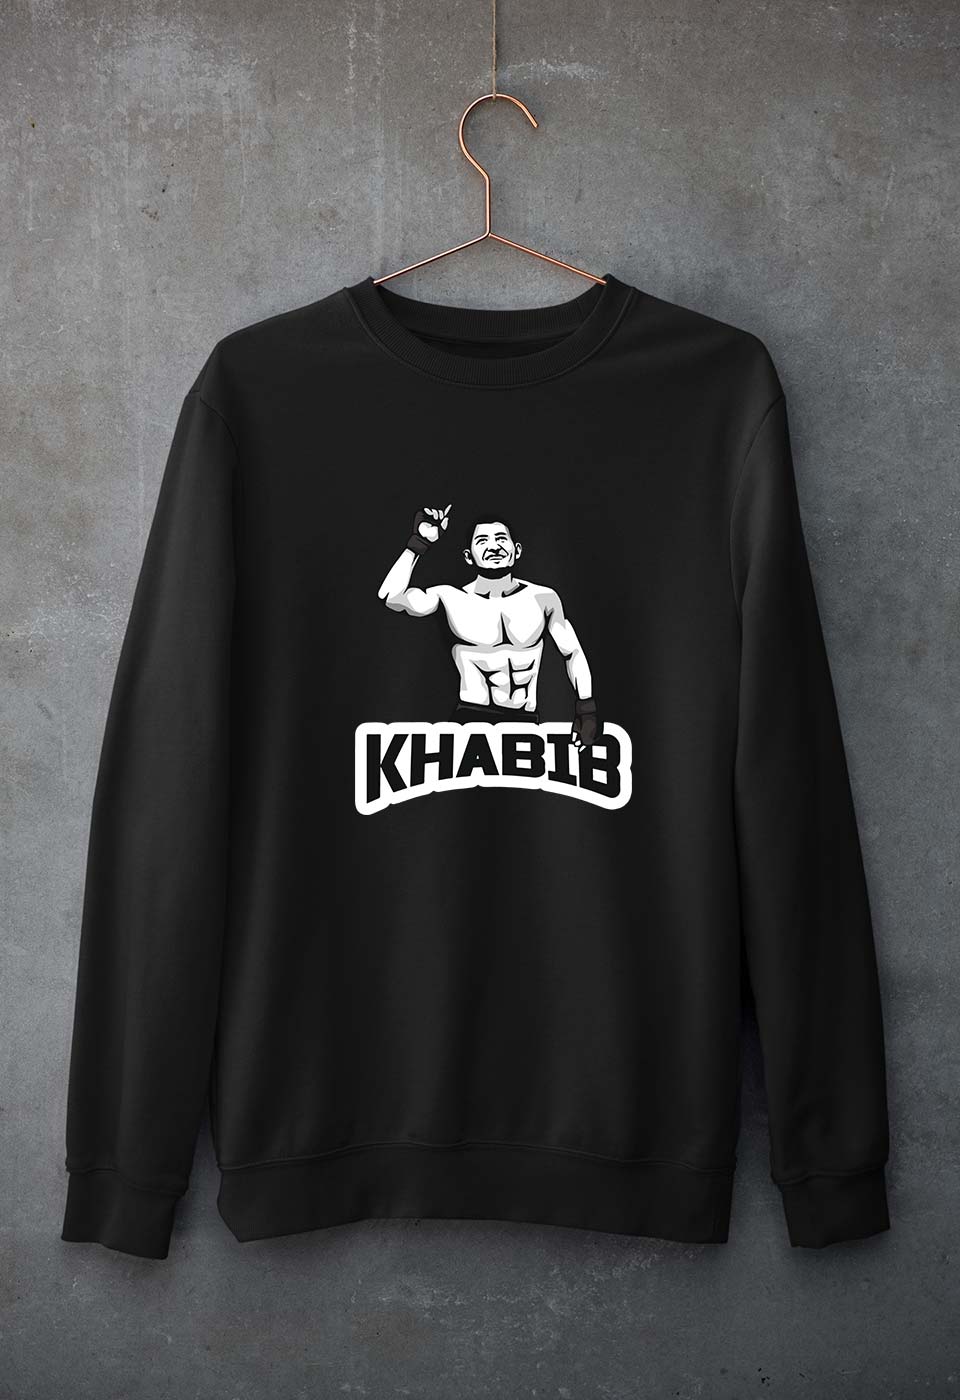 Khabib Nurmagomedov Unisex Sweatshirt for Men/Women-S(40 Inches)-Black-Ektarfa.online